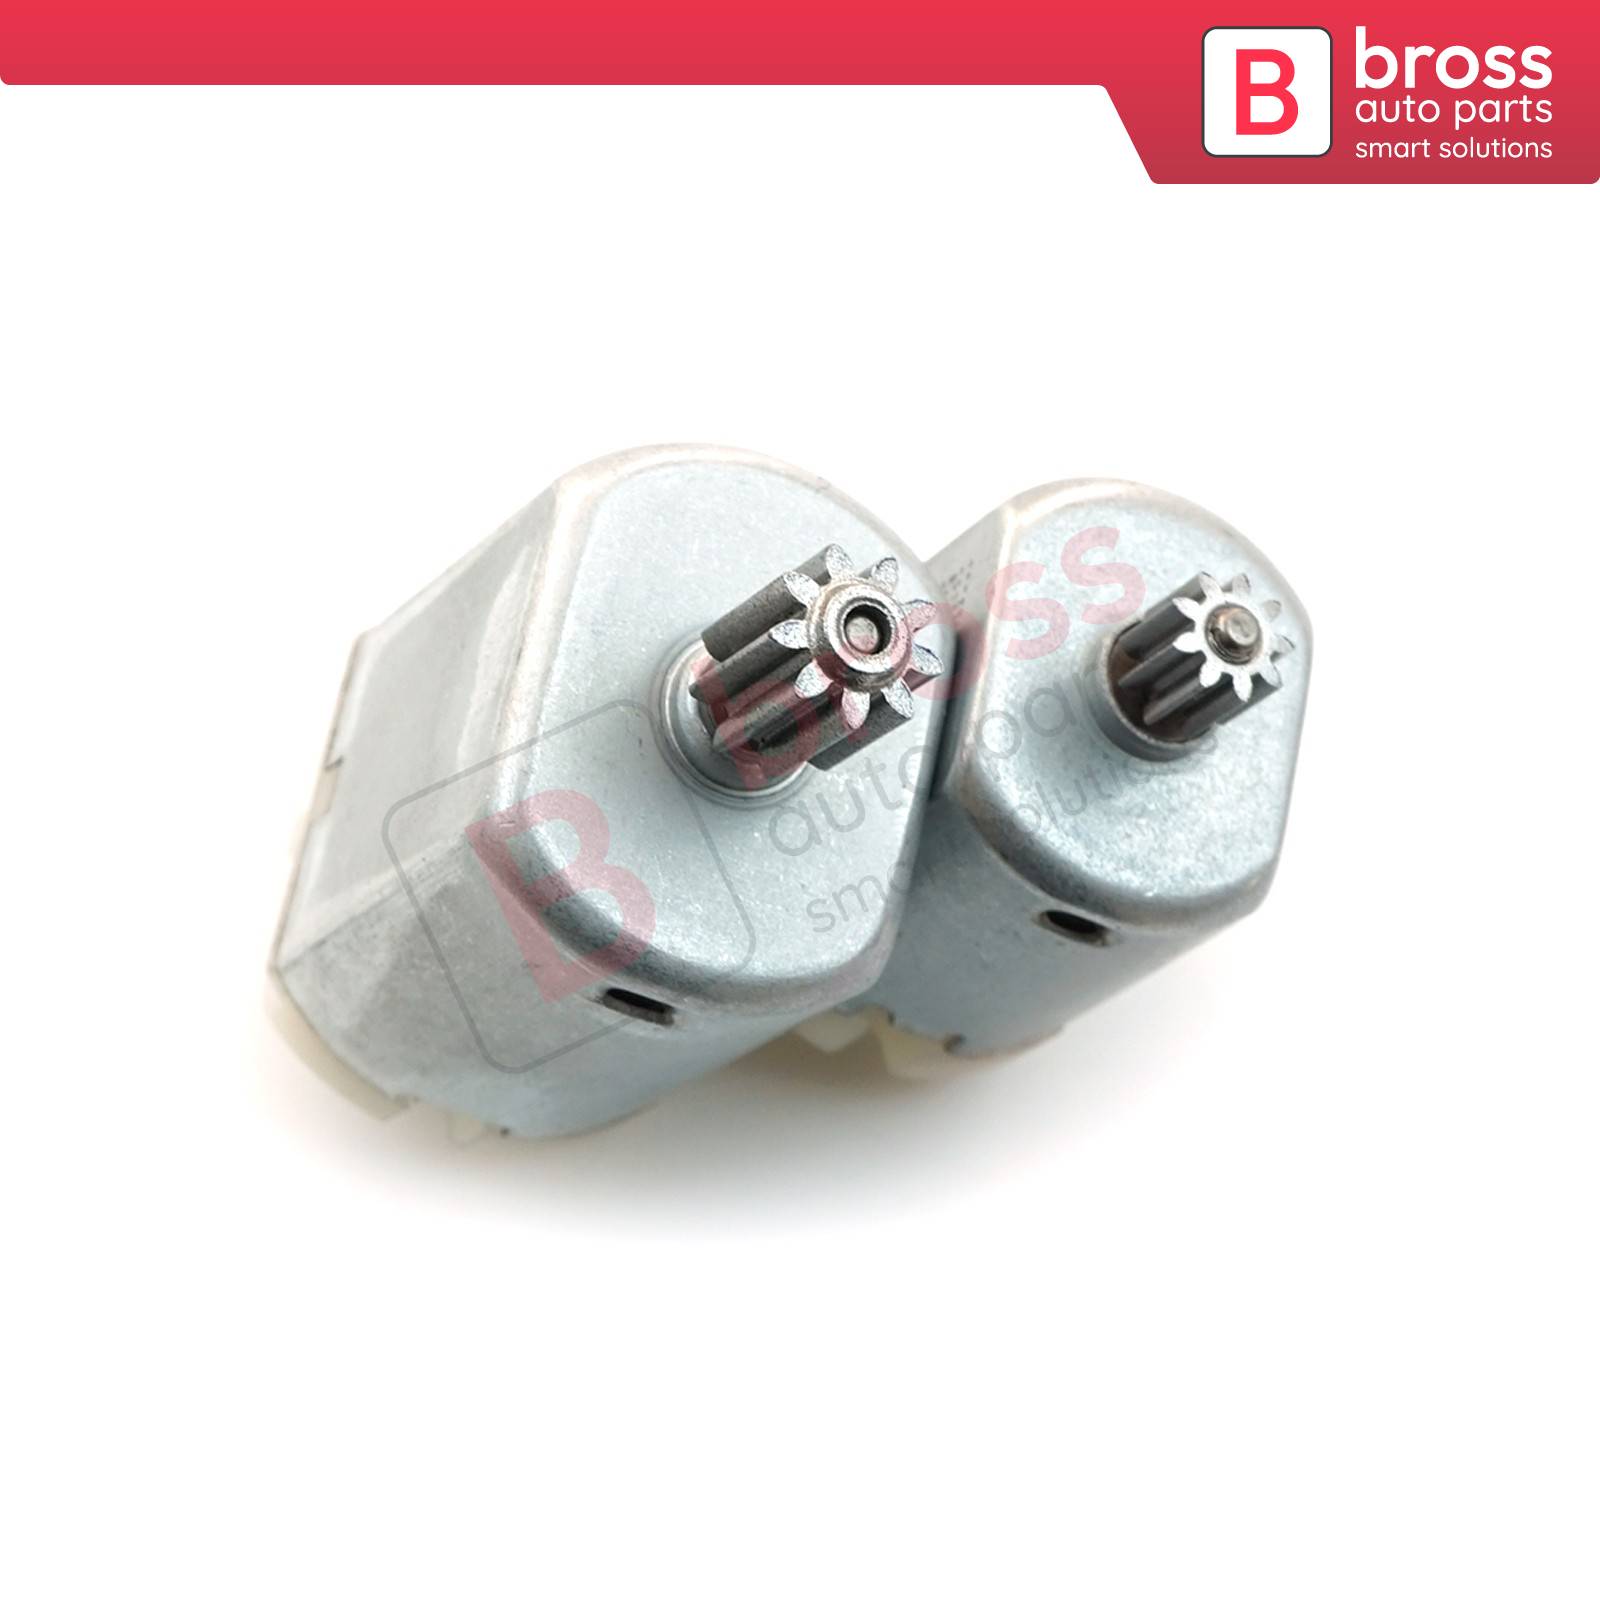 Bross Auto Parts LLC - BGE663 Door Lock 12V DC Actuator Small Motor Gear  For Audi VW Skoda Porsche